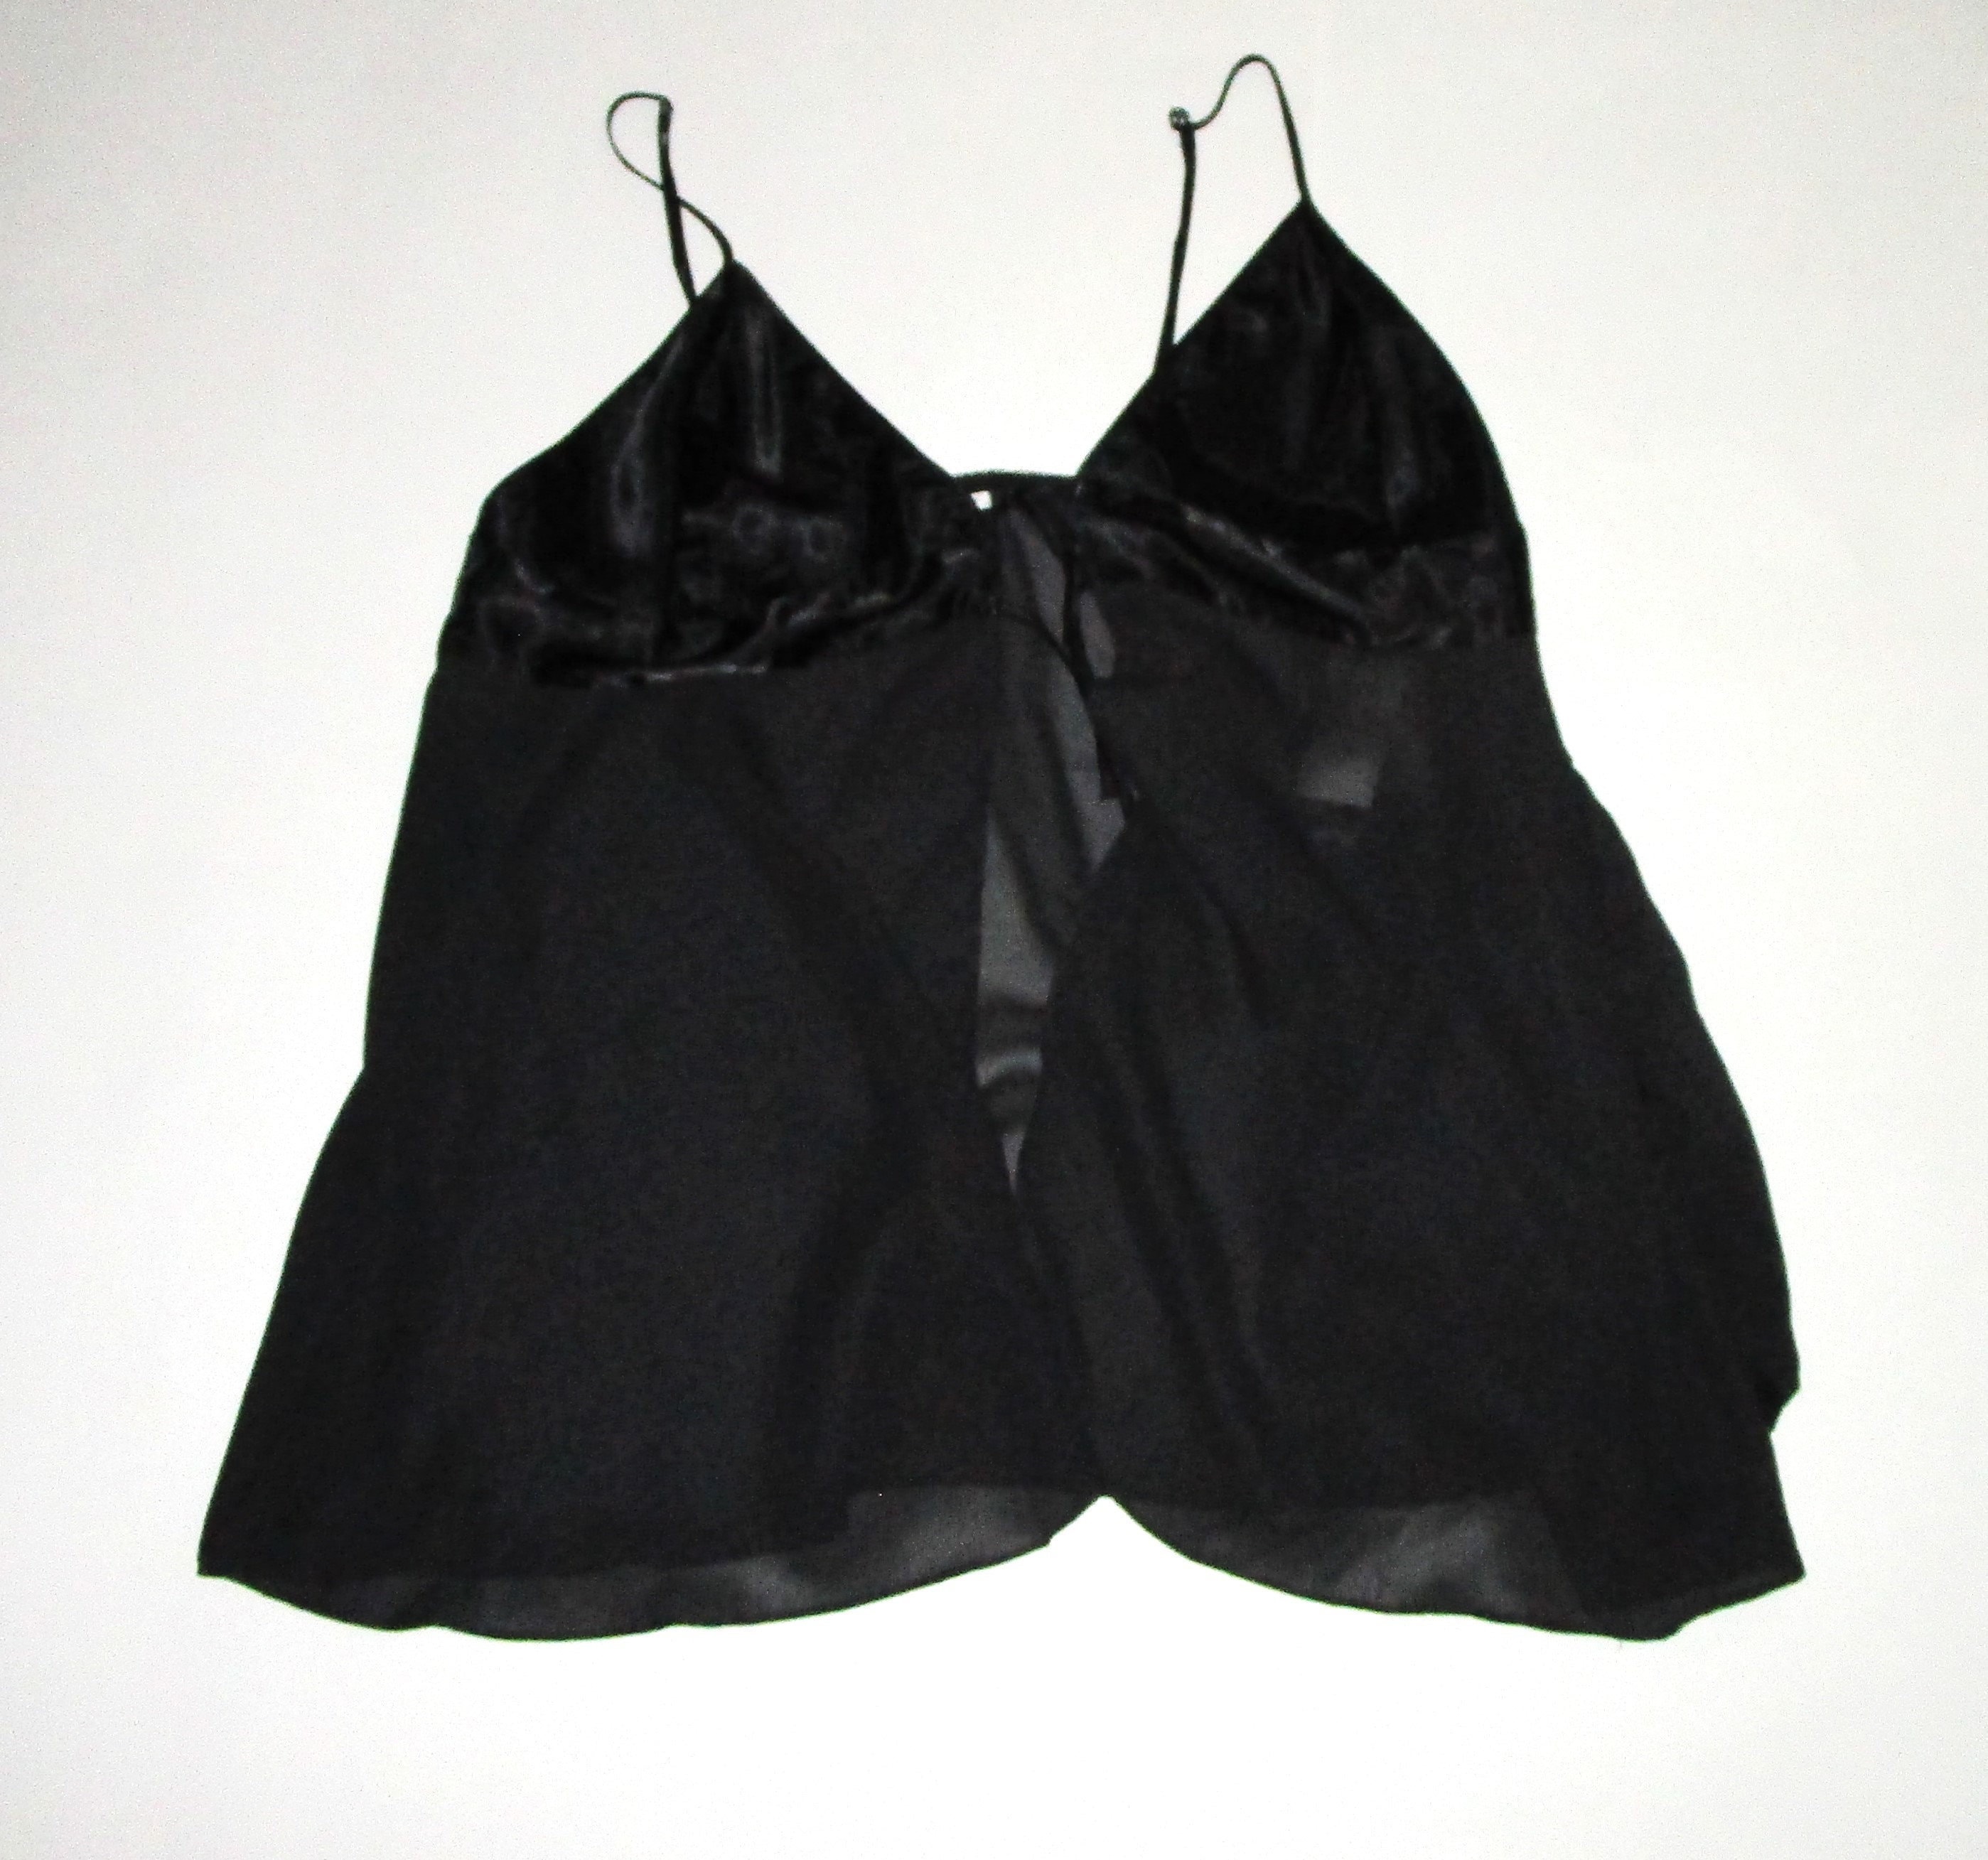 Natori BLACK Satin and Lace CAMISOLE Cami Top Underwear Sleepwear Lingerie  XS 